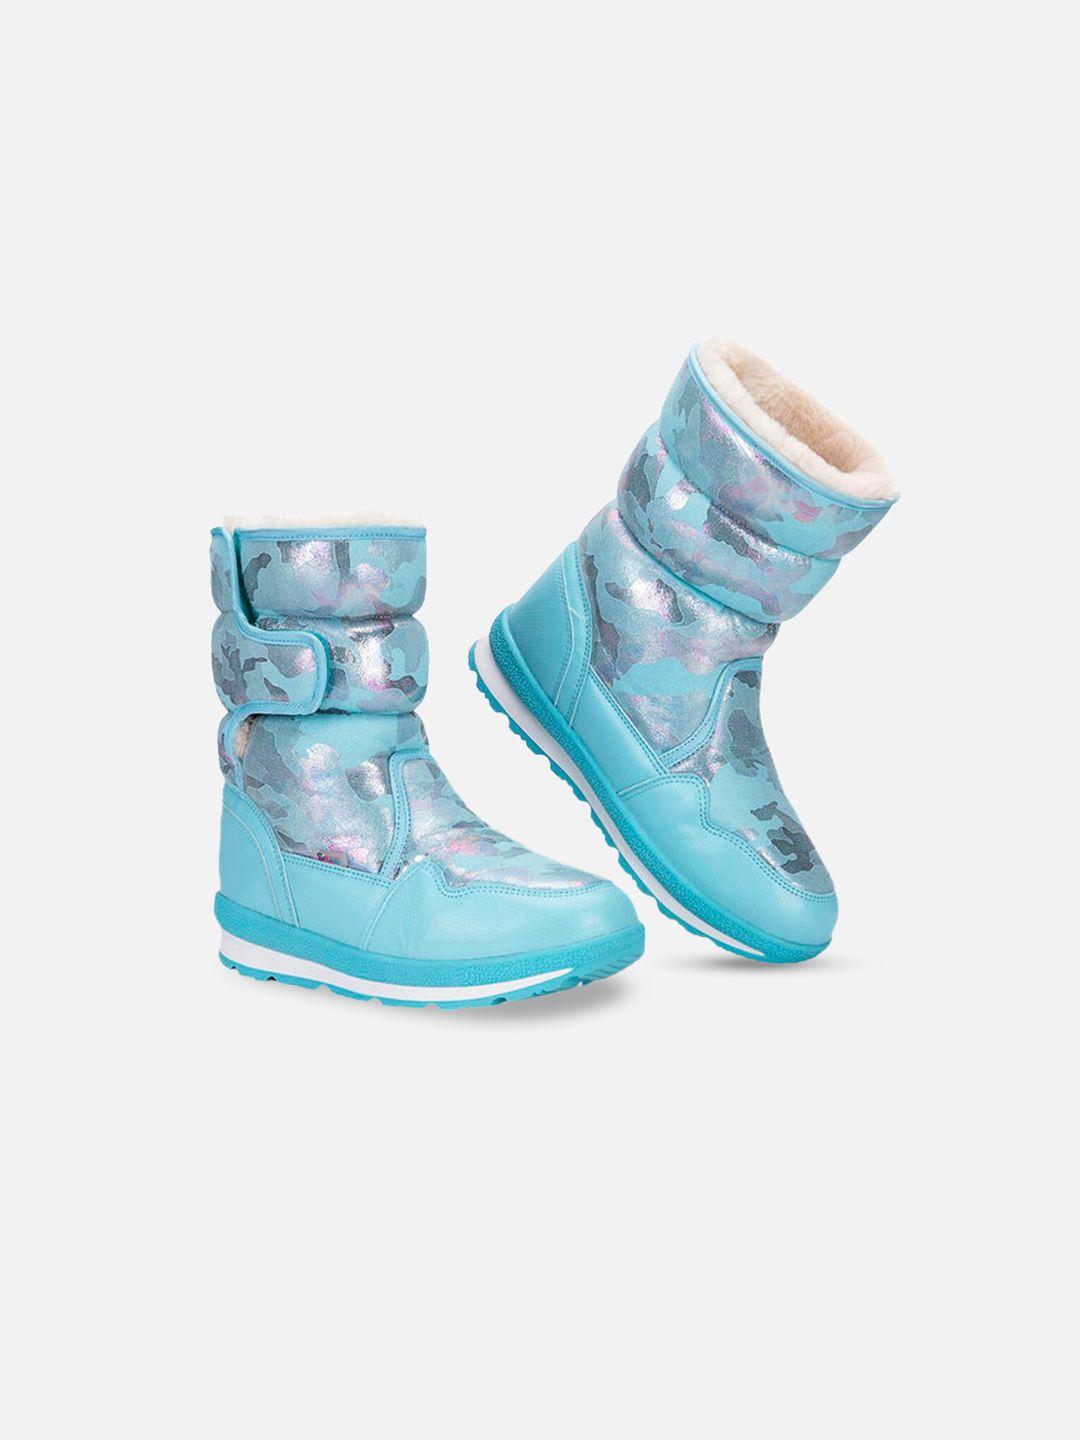 little-surprise-box-llp-kids-blue-&-silver-coloured-printed-winter/snowboots